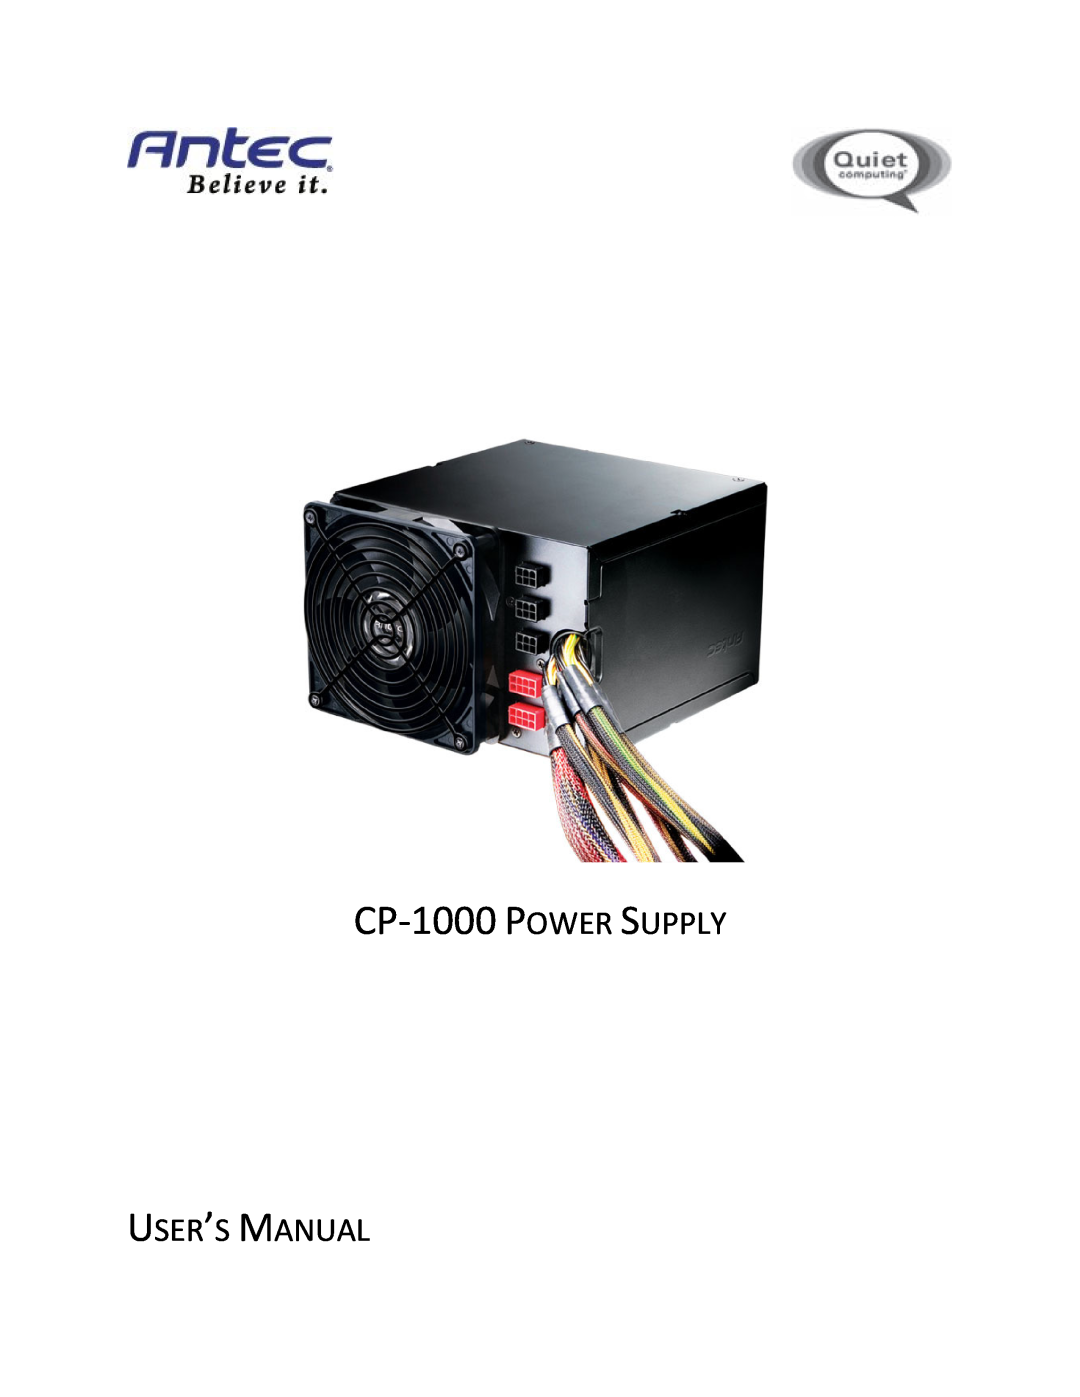 Antec user manual CP-1000 POWER SUPPLY, User’S Manual 